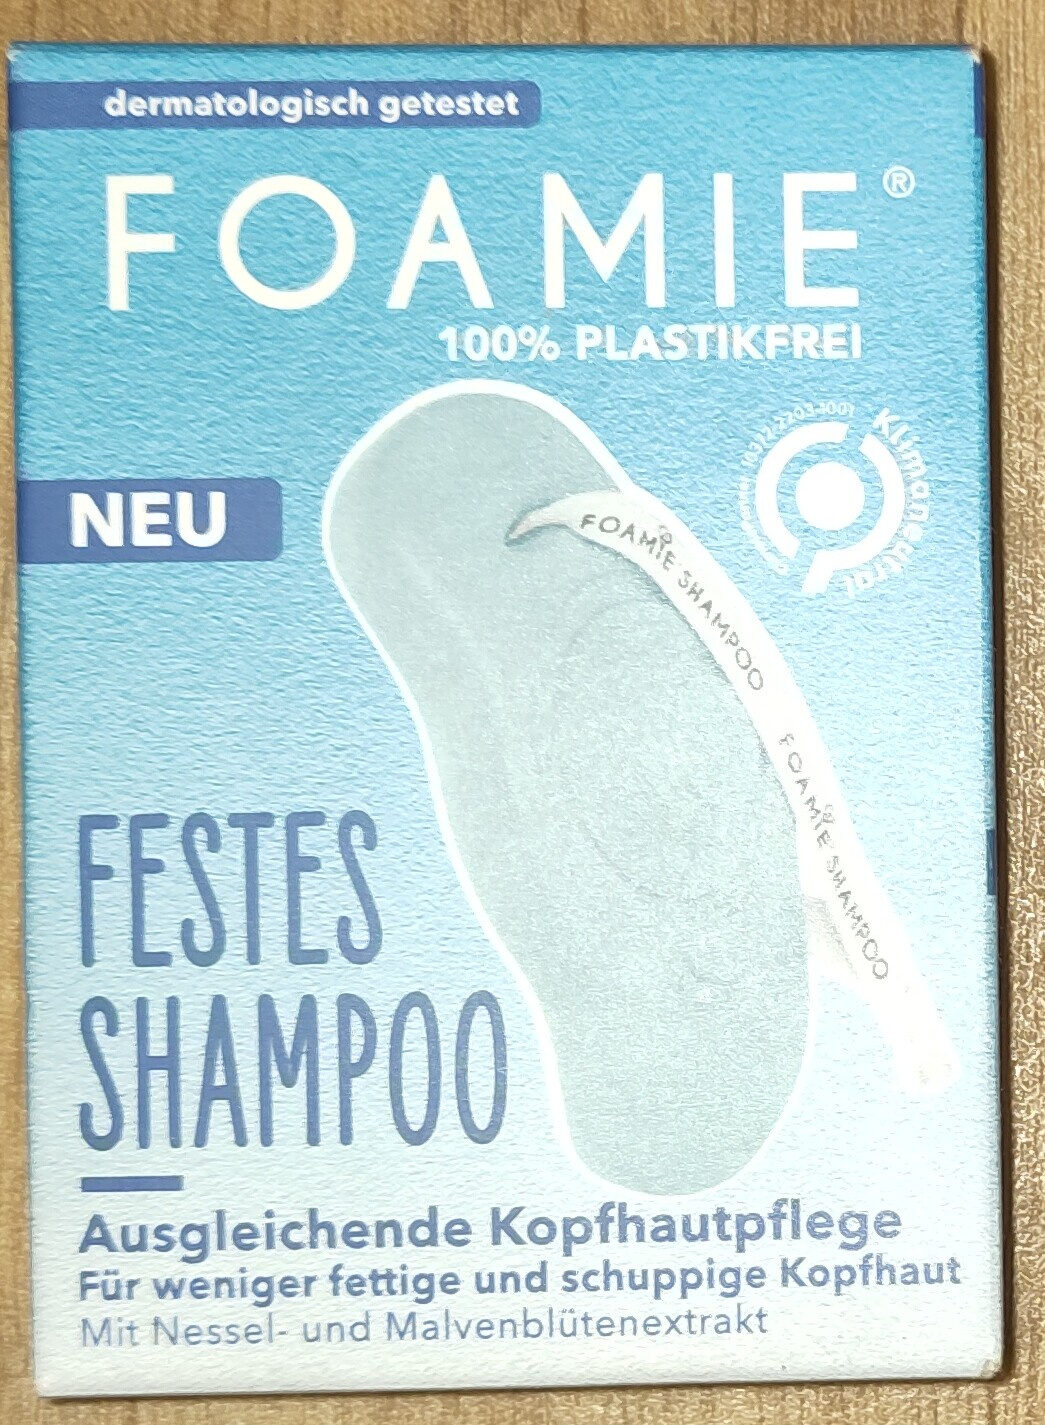 festes Shampoo Ausgegleichende Kopfhautpflege - Product - de